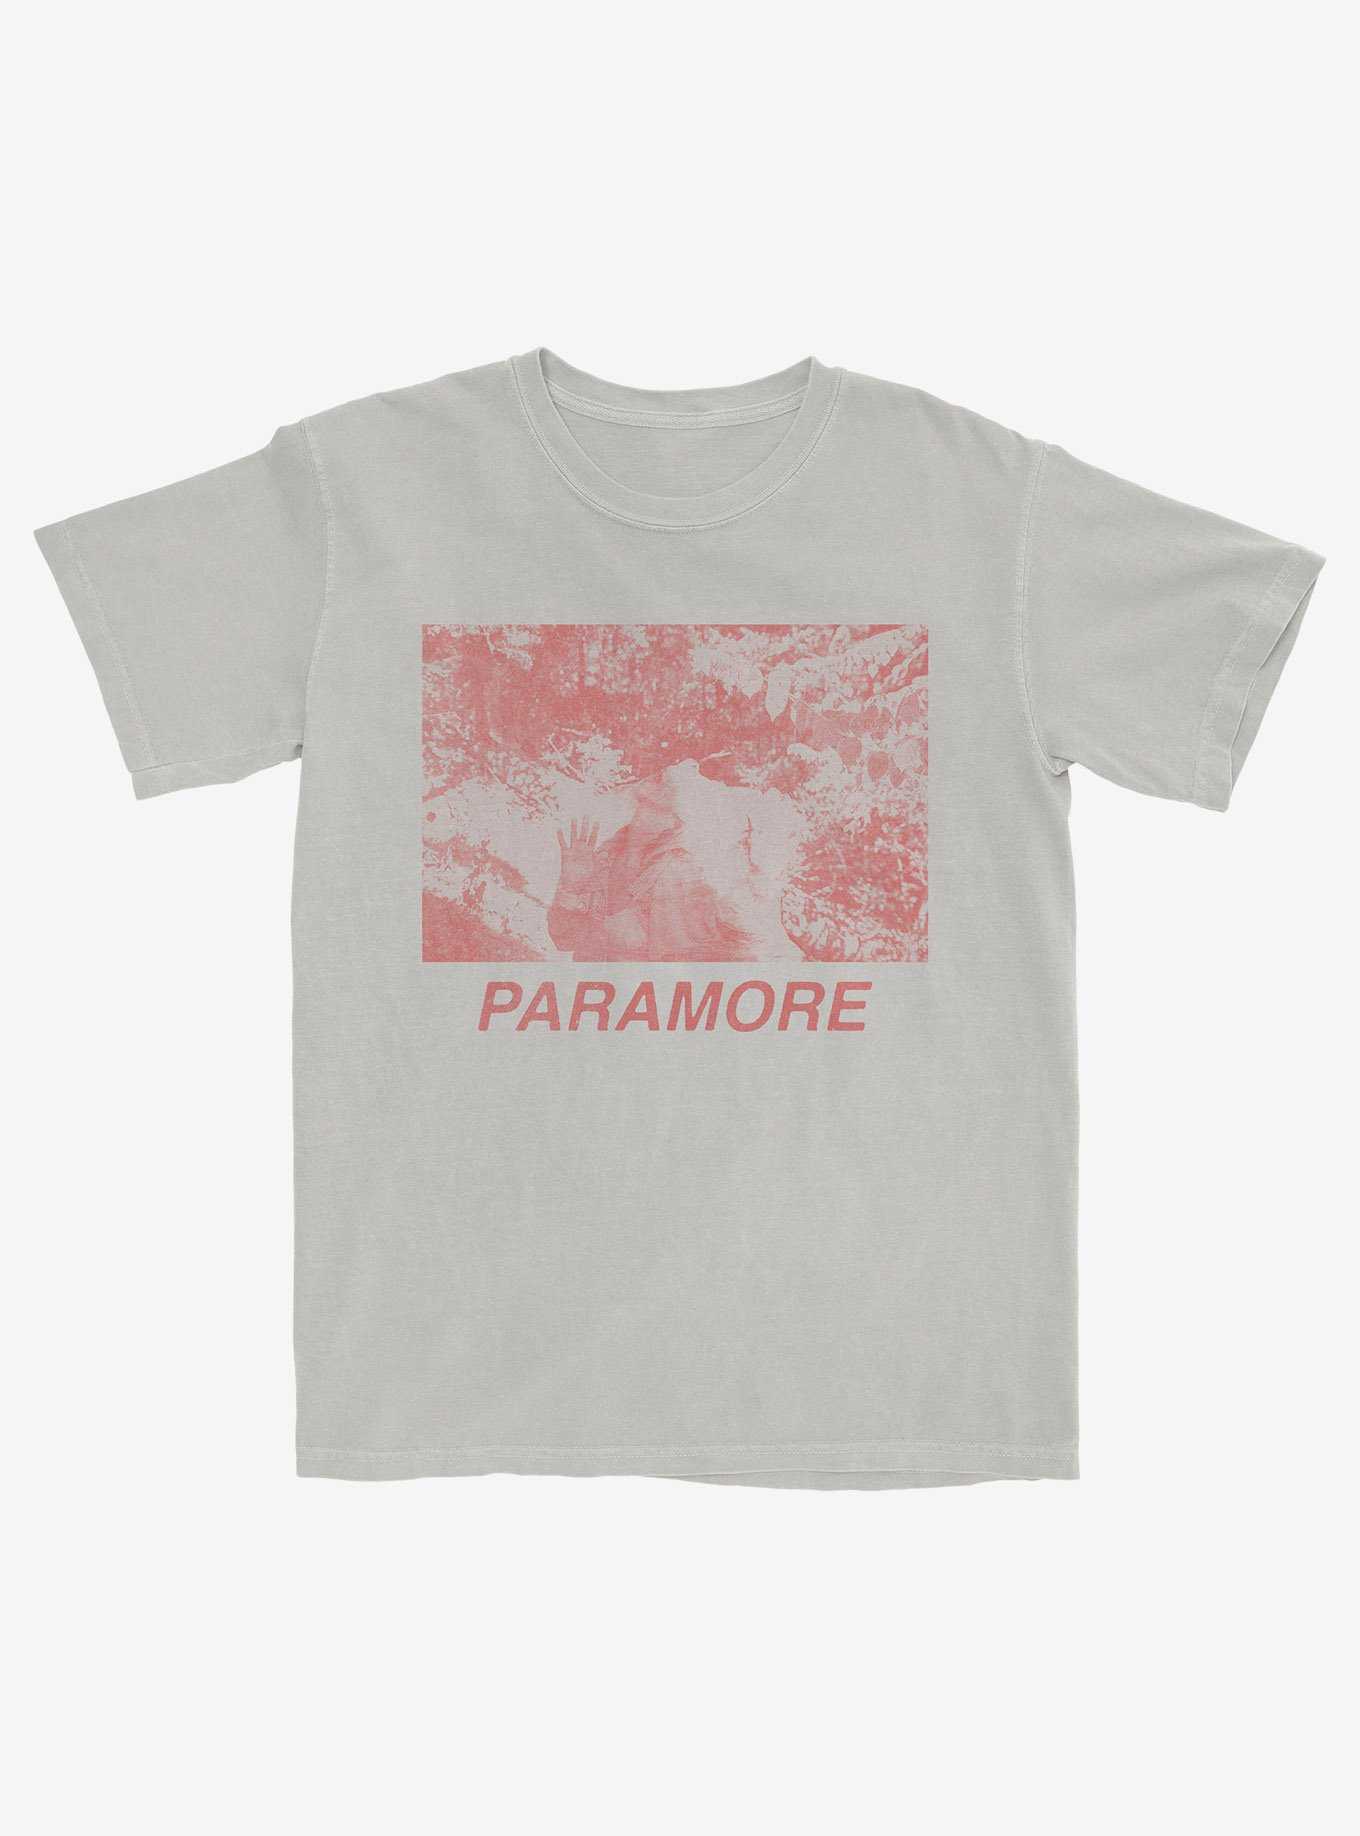 Paramore Forest Boyfriend Fit Girls T-Shirt, , hi-res